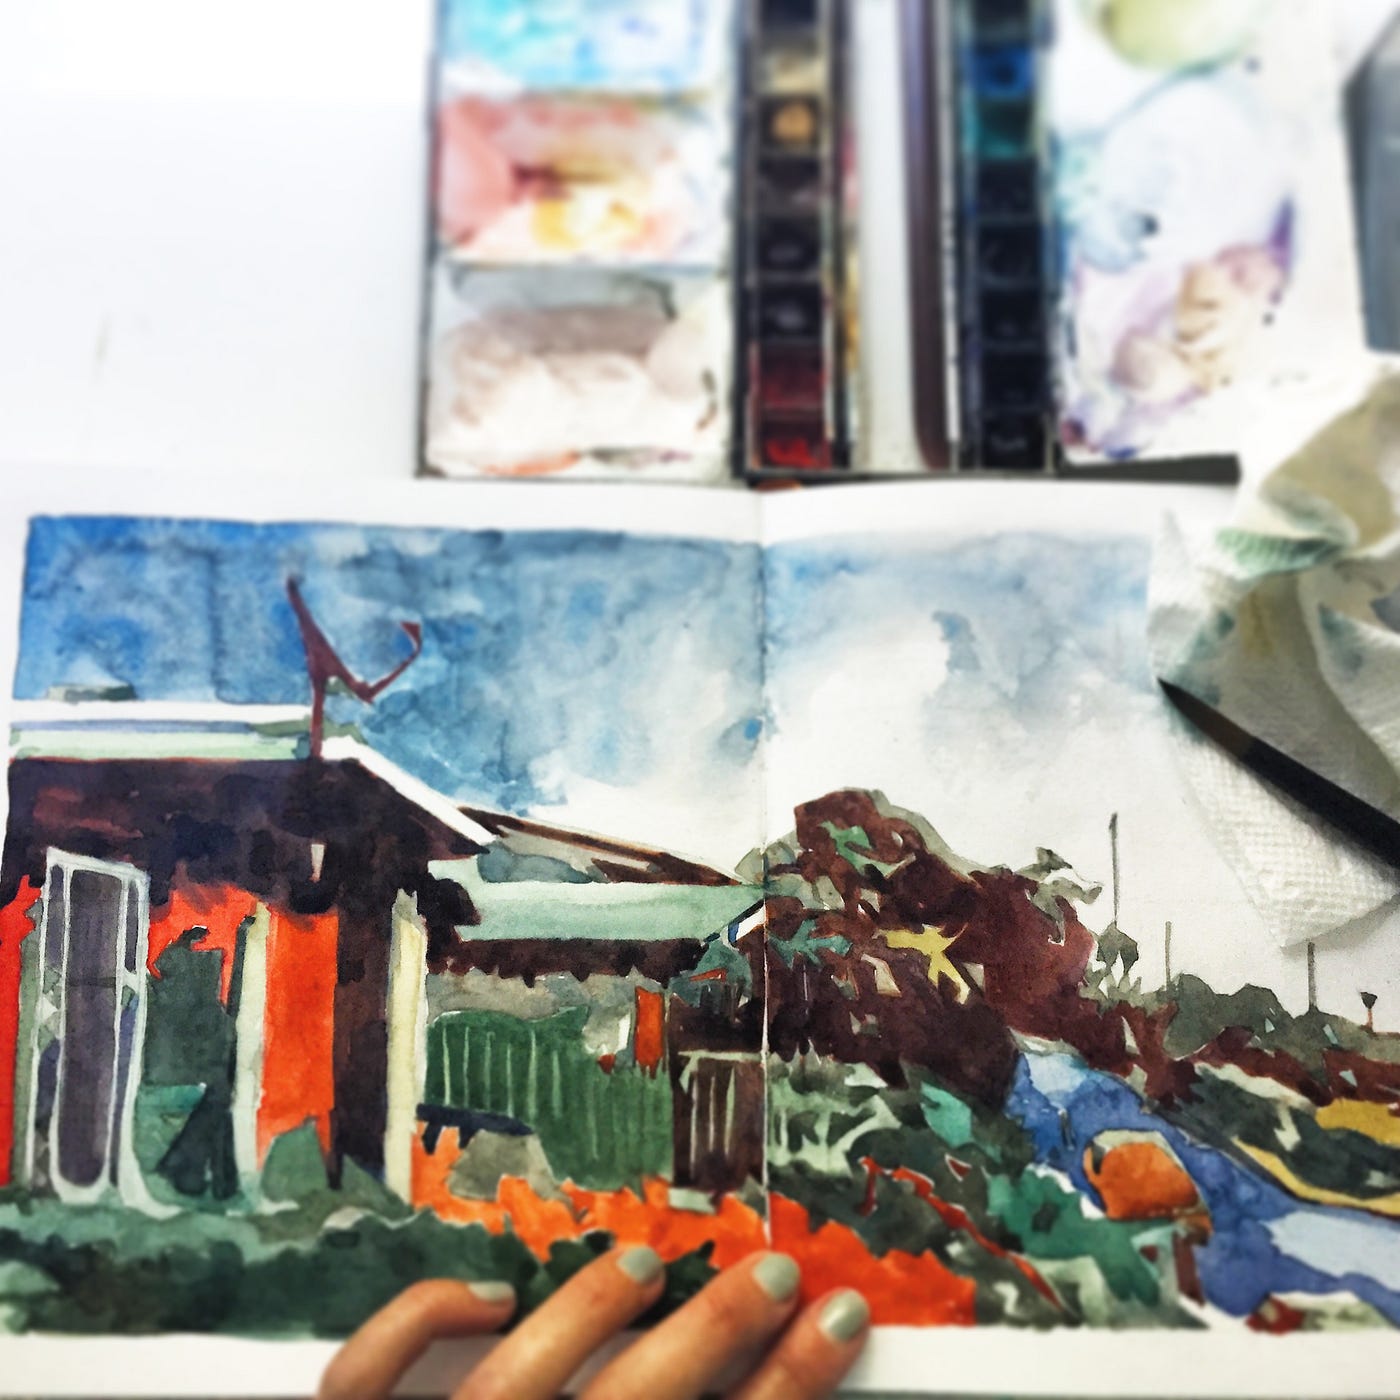 Watercolor and Colored Pencils - Mixing Your Media - Belinda Del Pesco